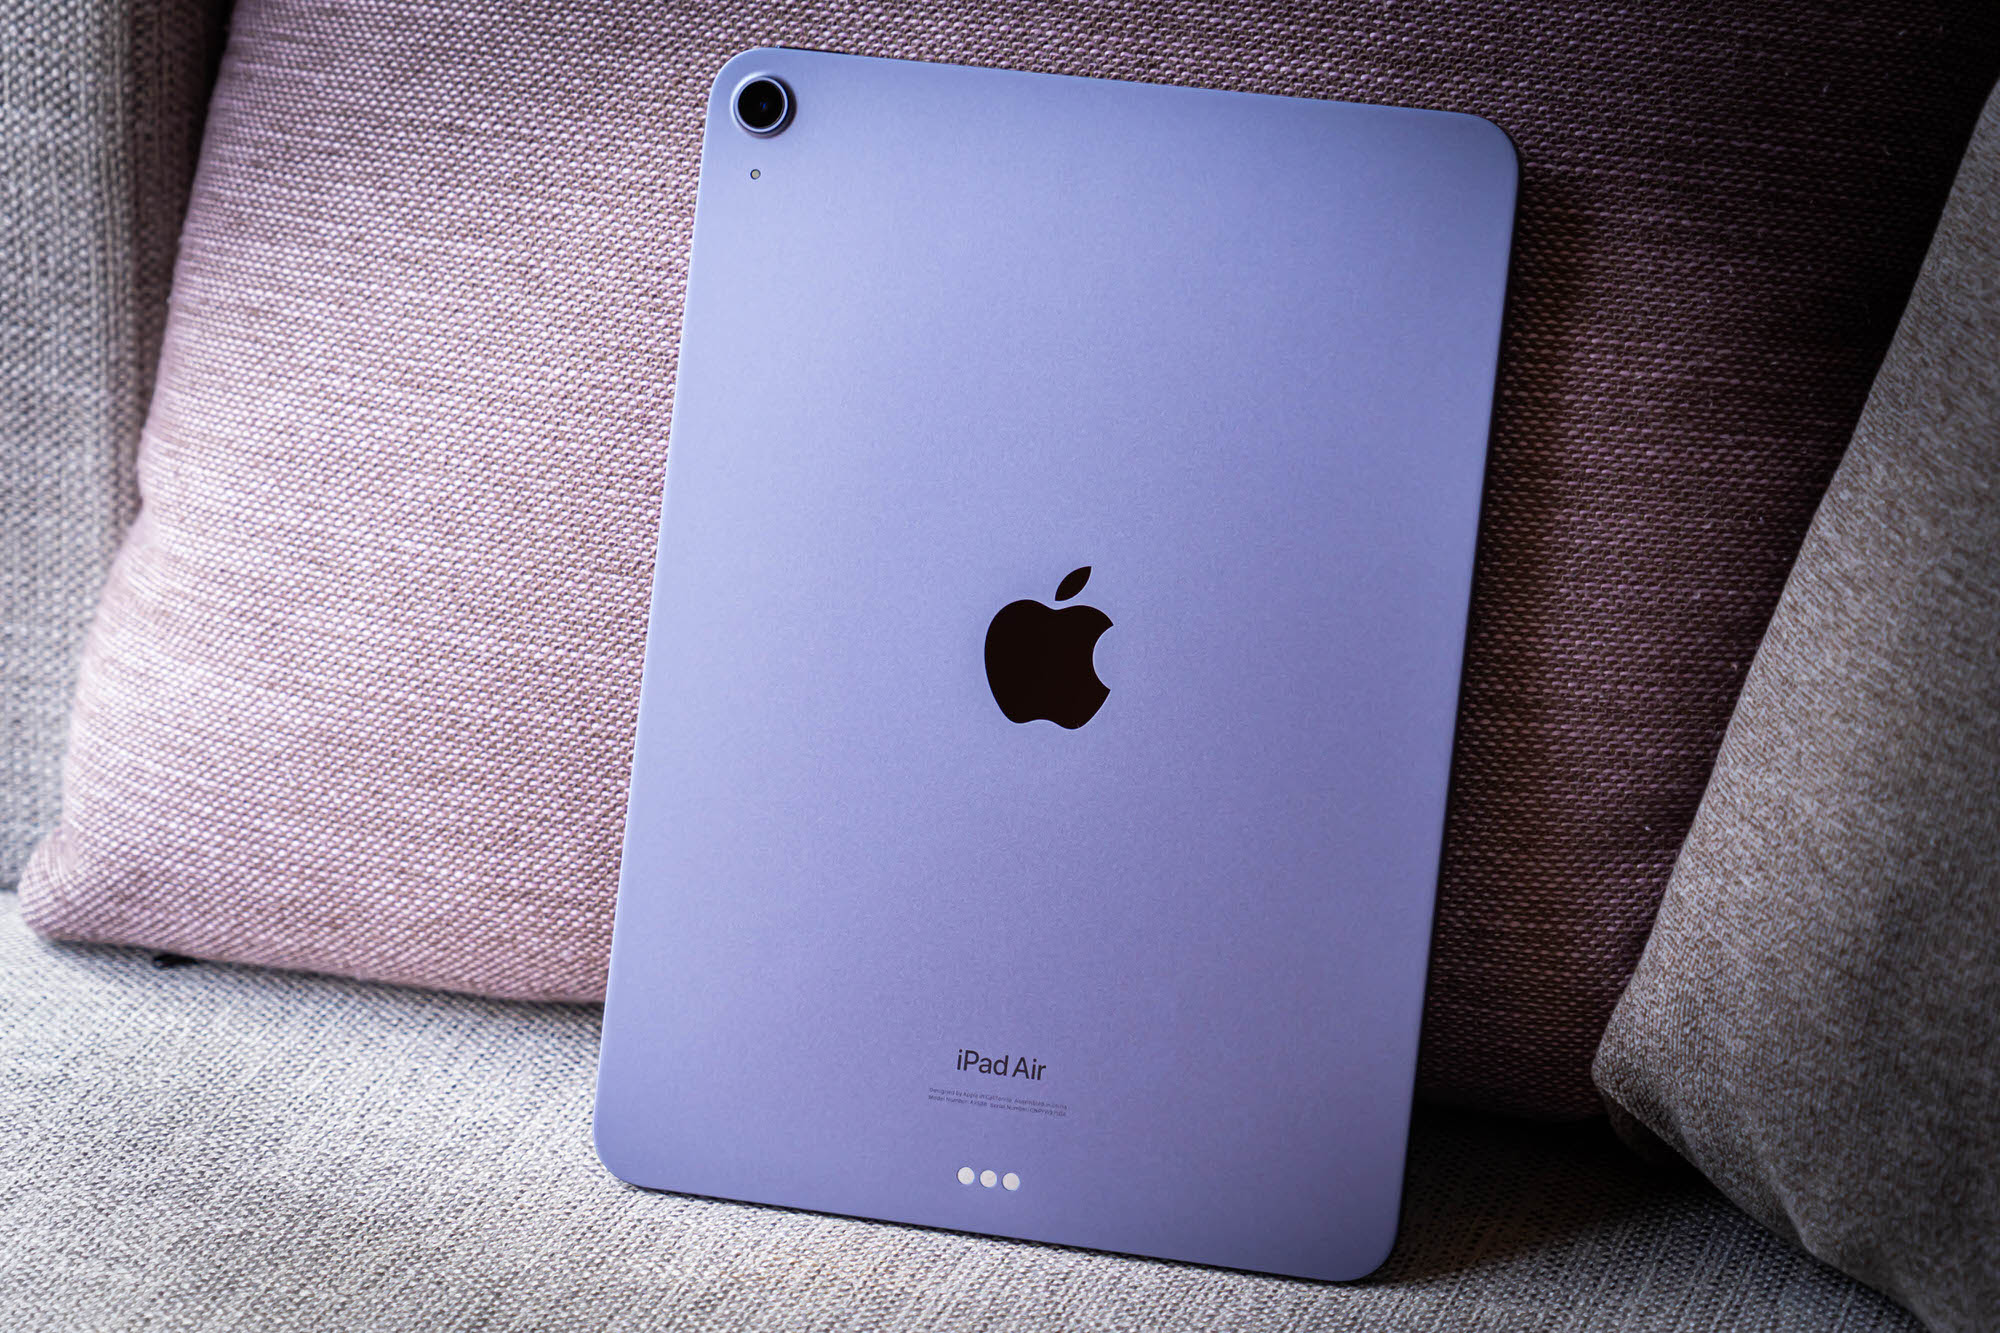 iPad Air レビュー (第5世代)。スペック／大きさいずれもピッタリなタブレット。M1チップで性能大幅向上 | CoRRiENTE.top